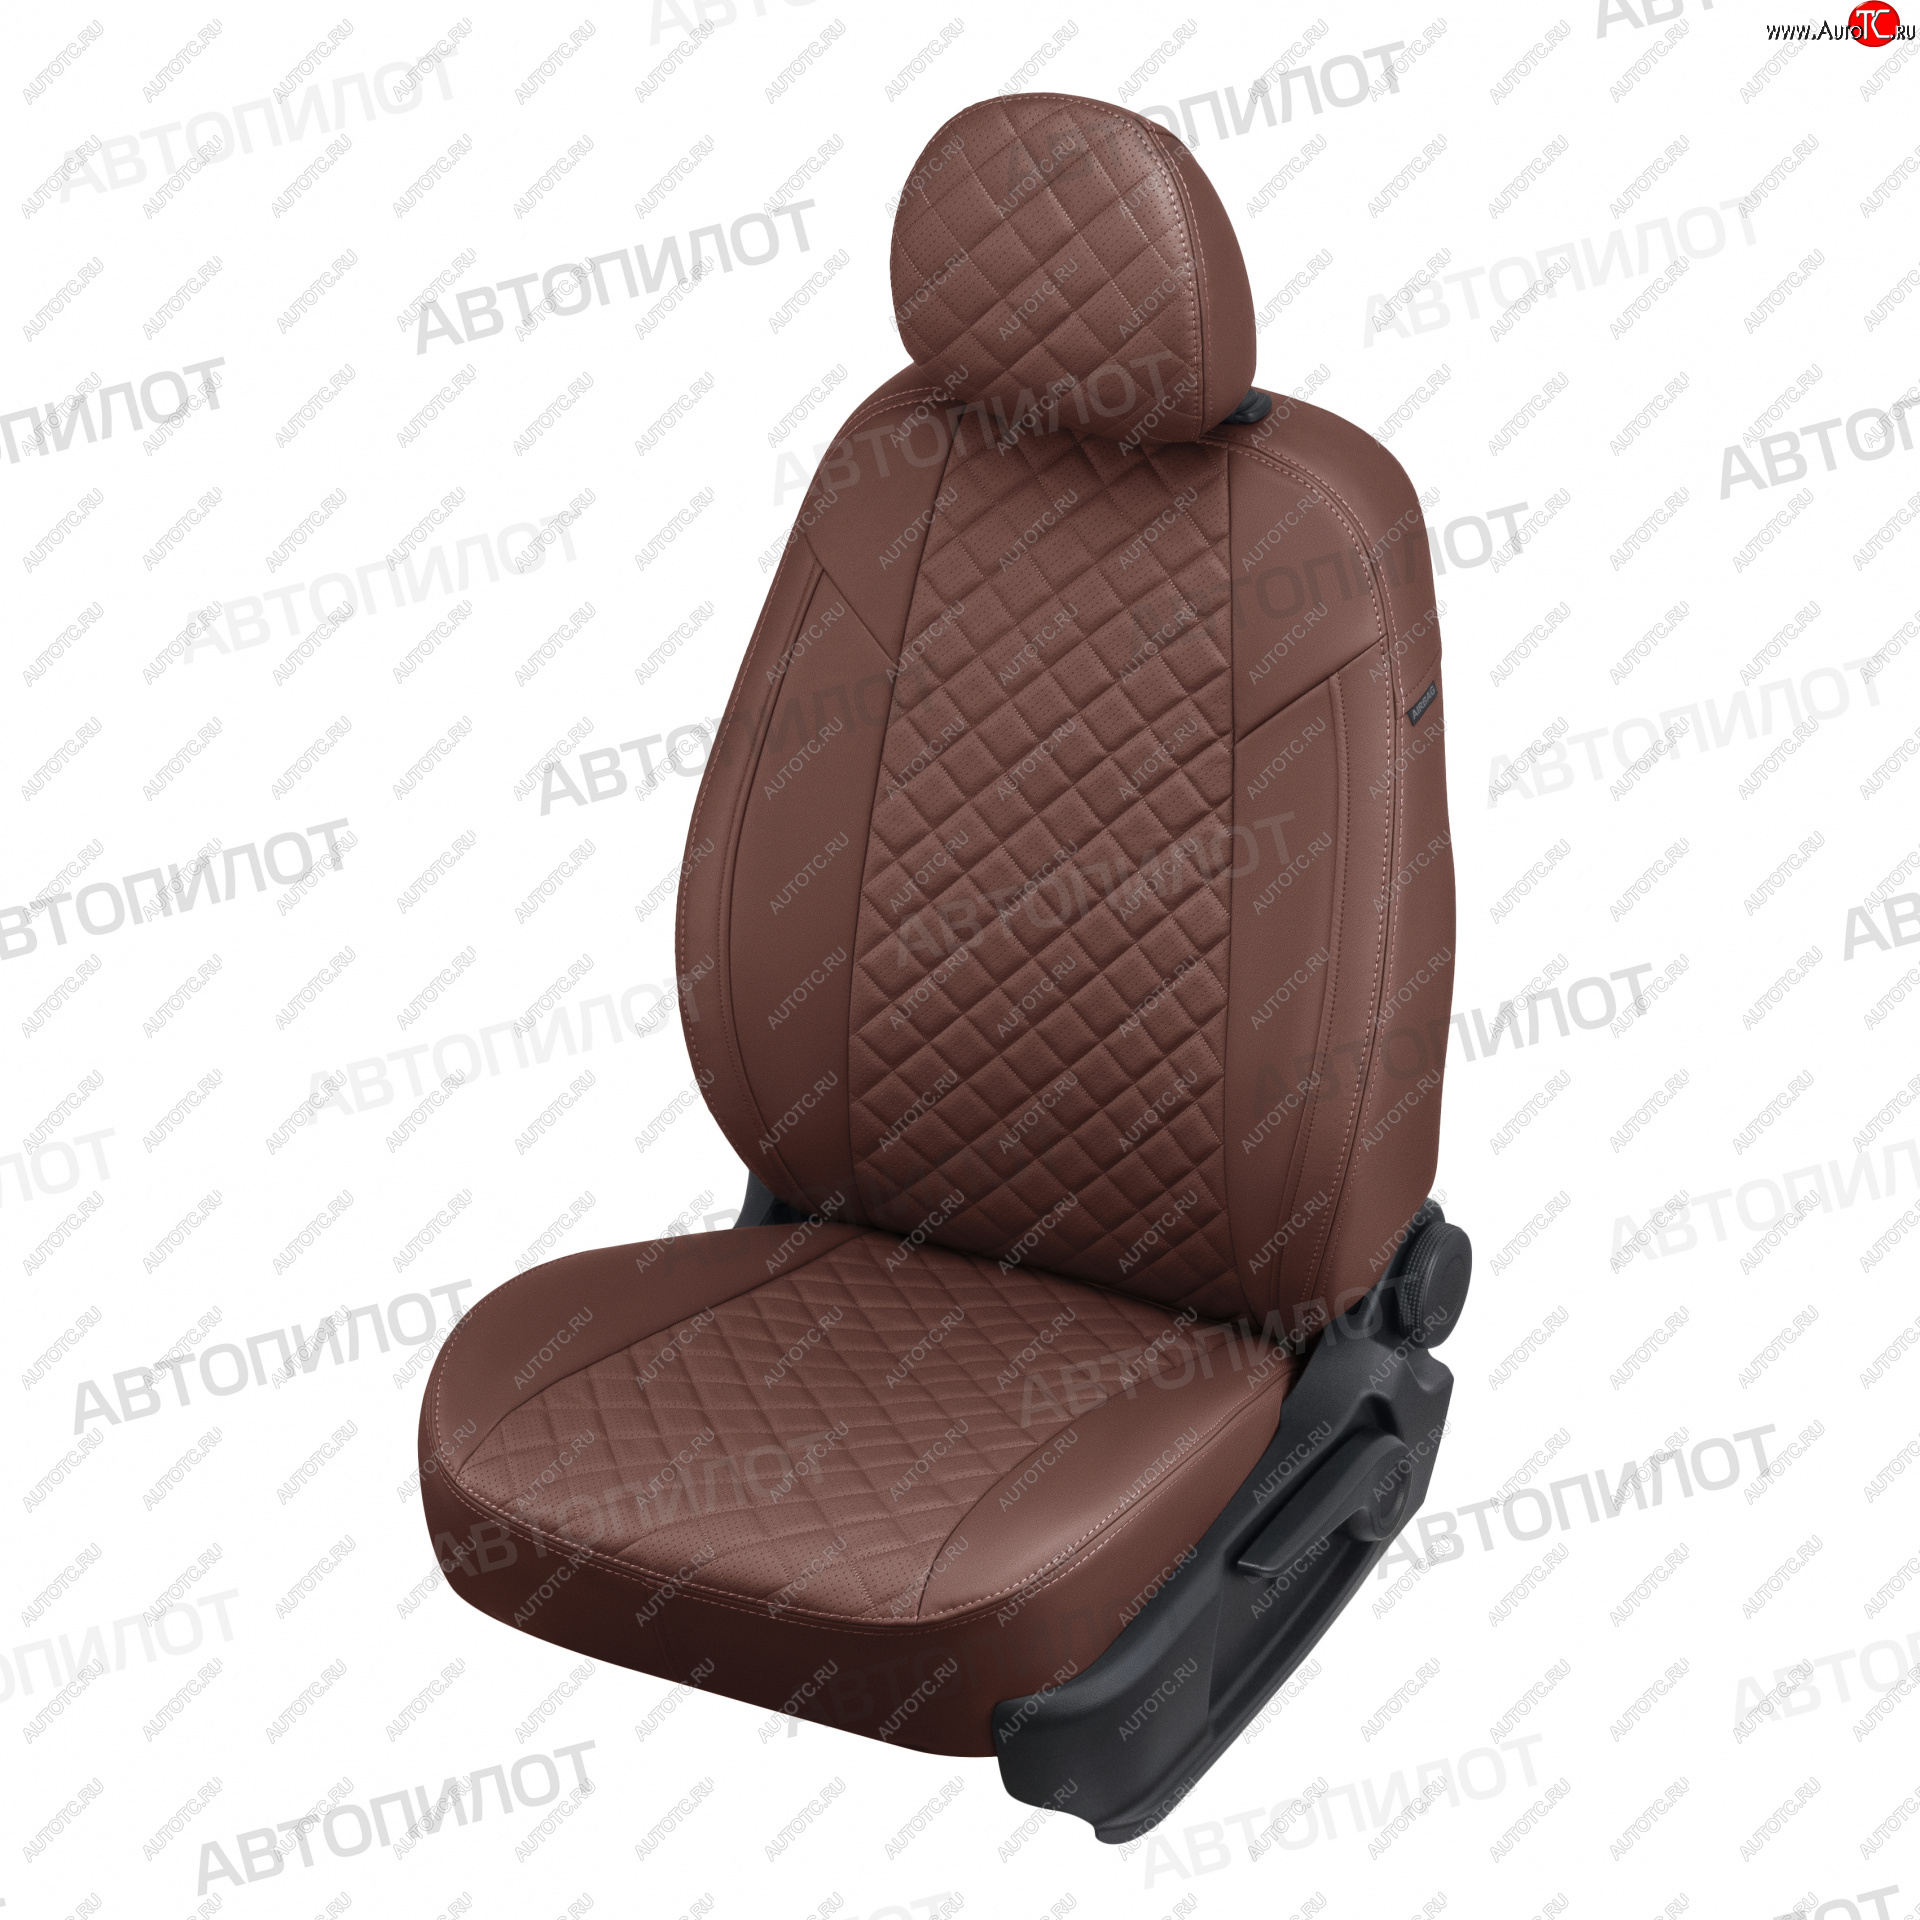 13 999 р. Чехлы сидений (экокожа) Автопилот Ромб  Ford S-Max  1 (2006-2015) (темно-коричневый)